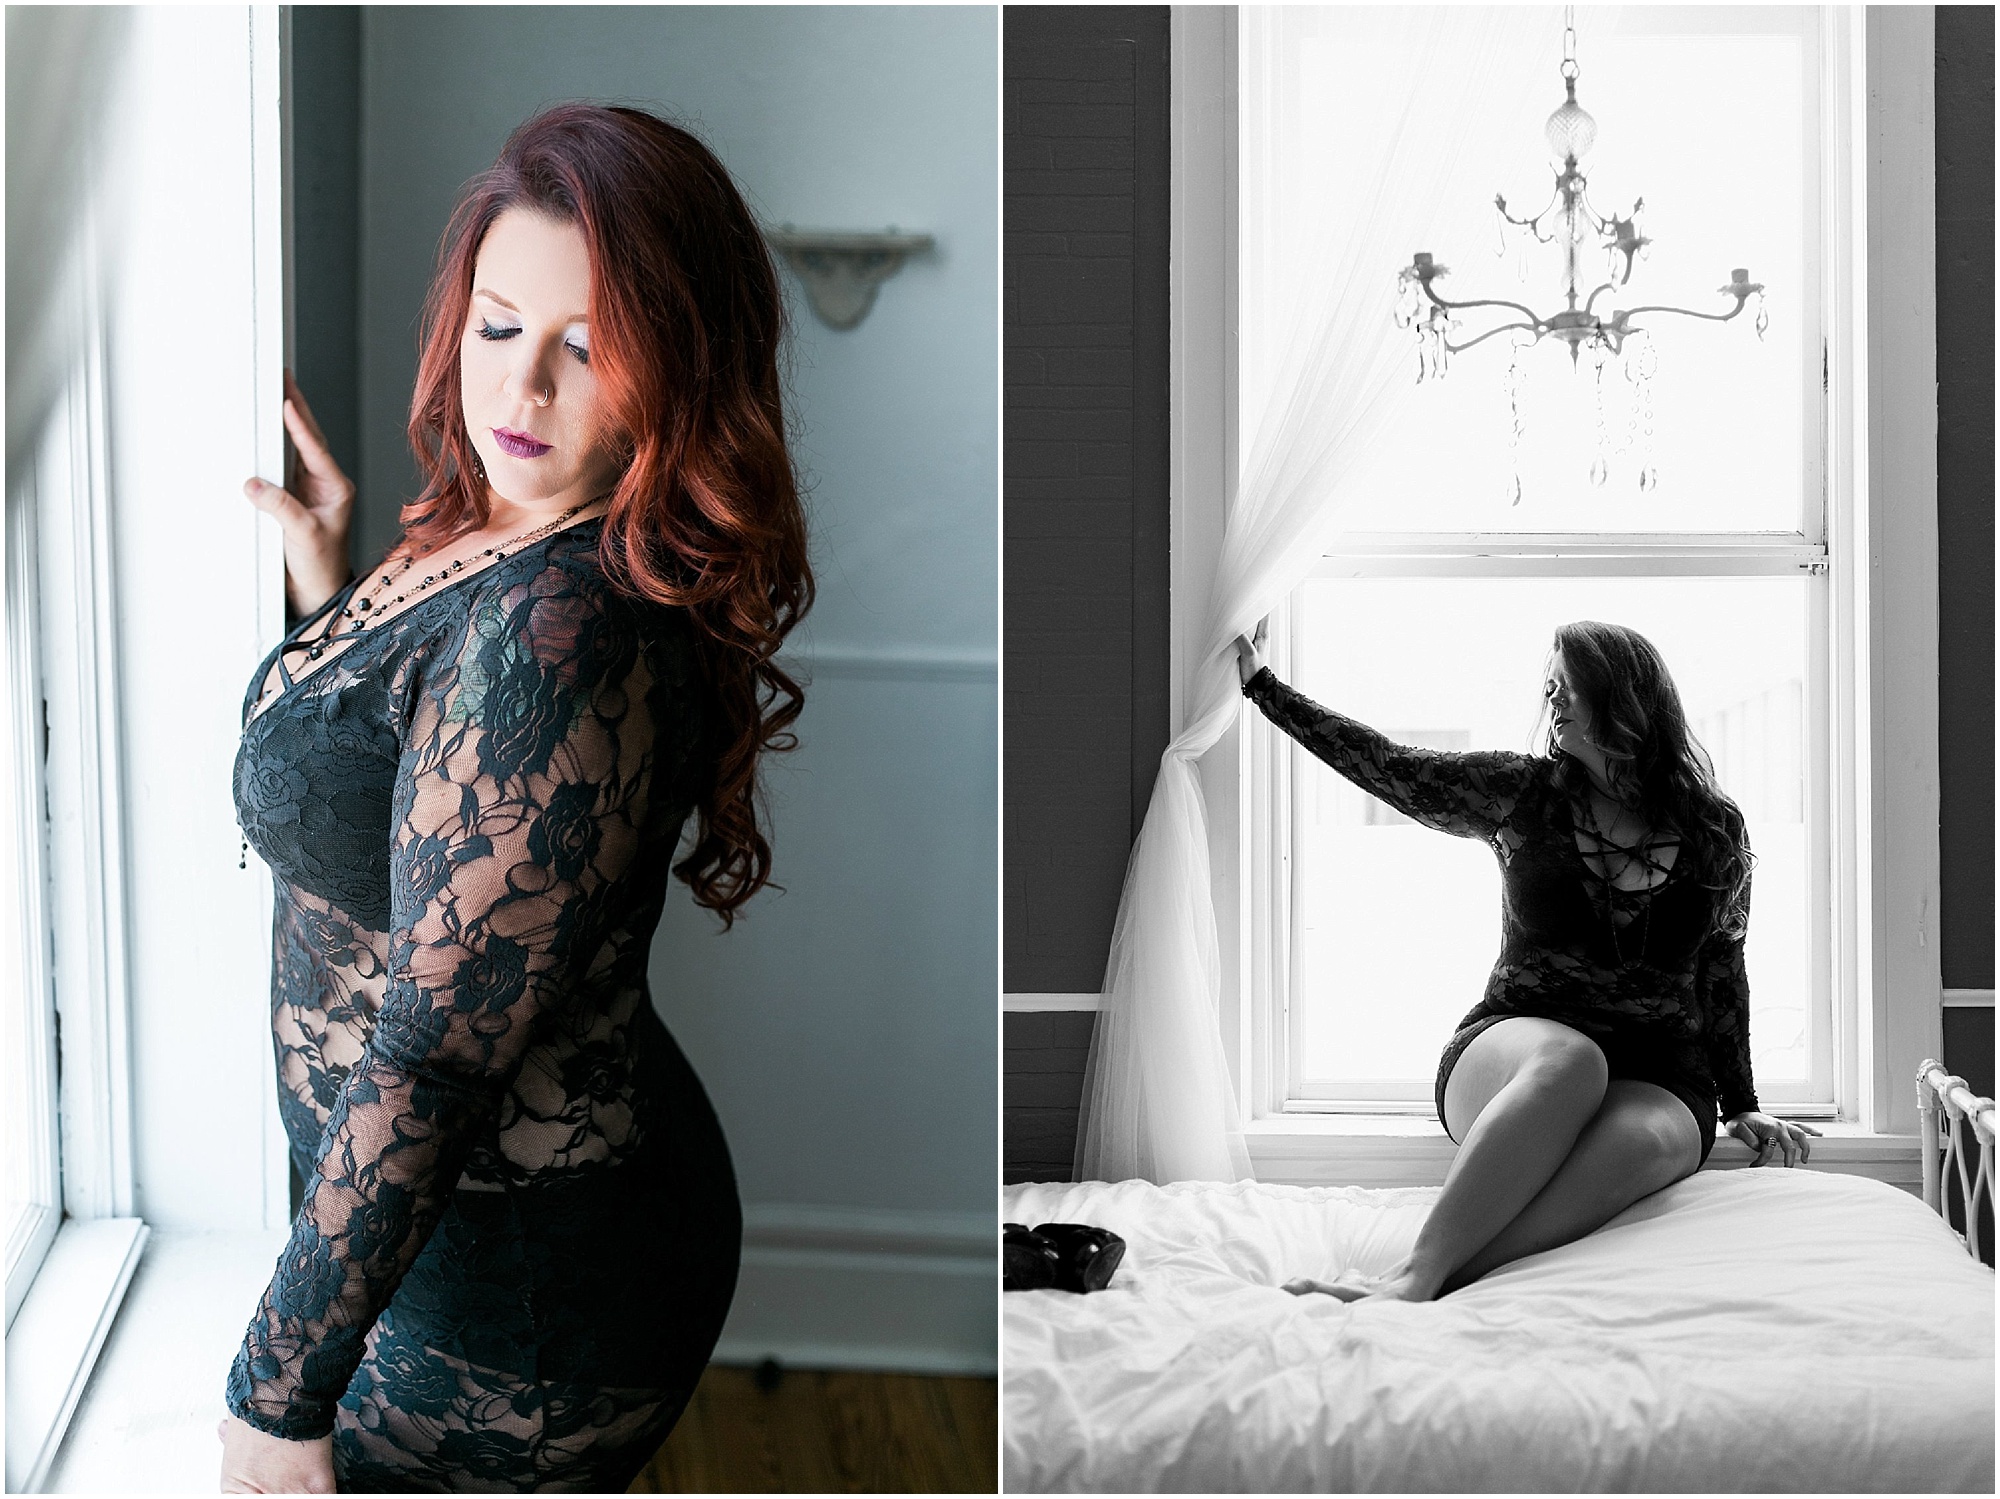 Model taking sensual photos near a window while wearing black lingerie. 